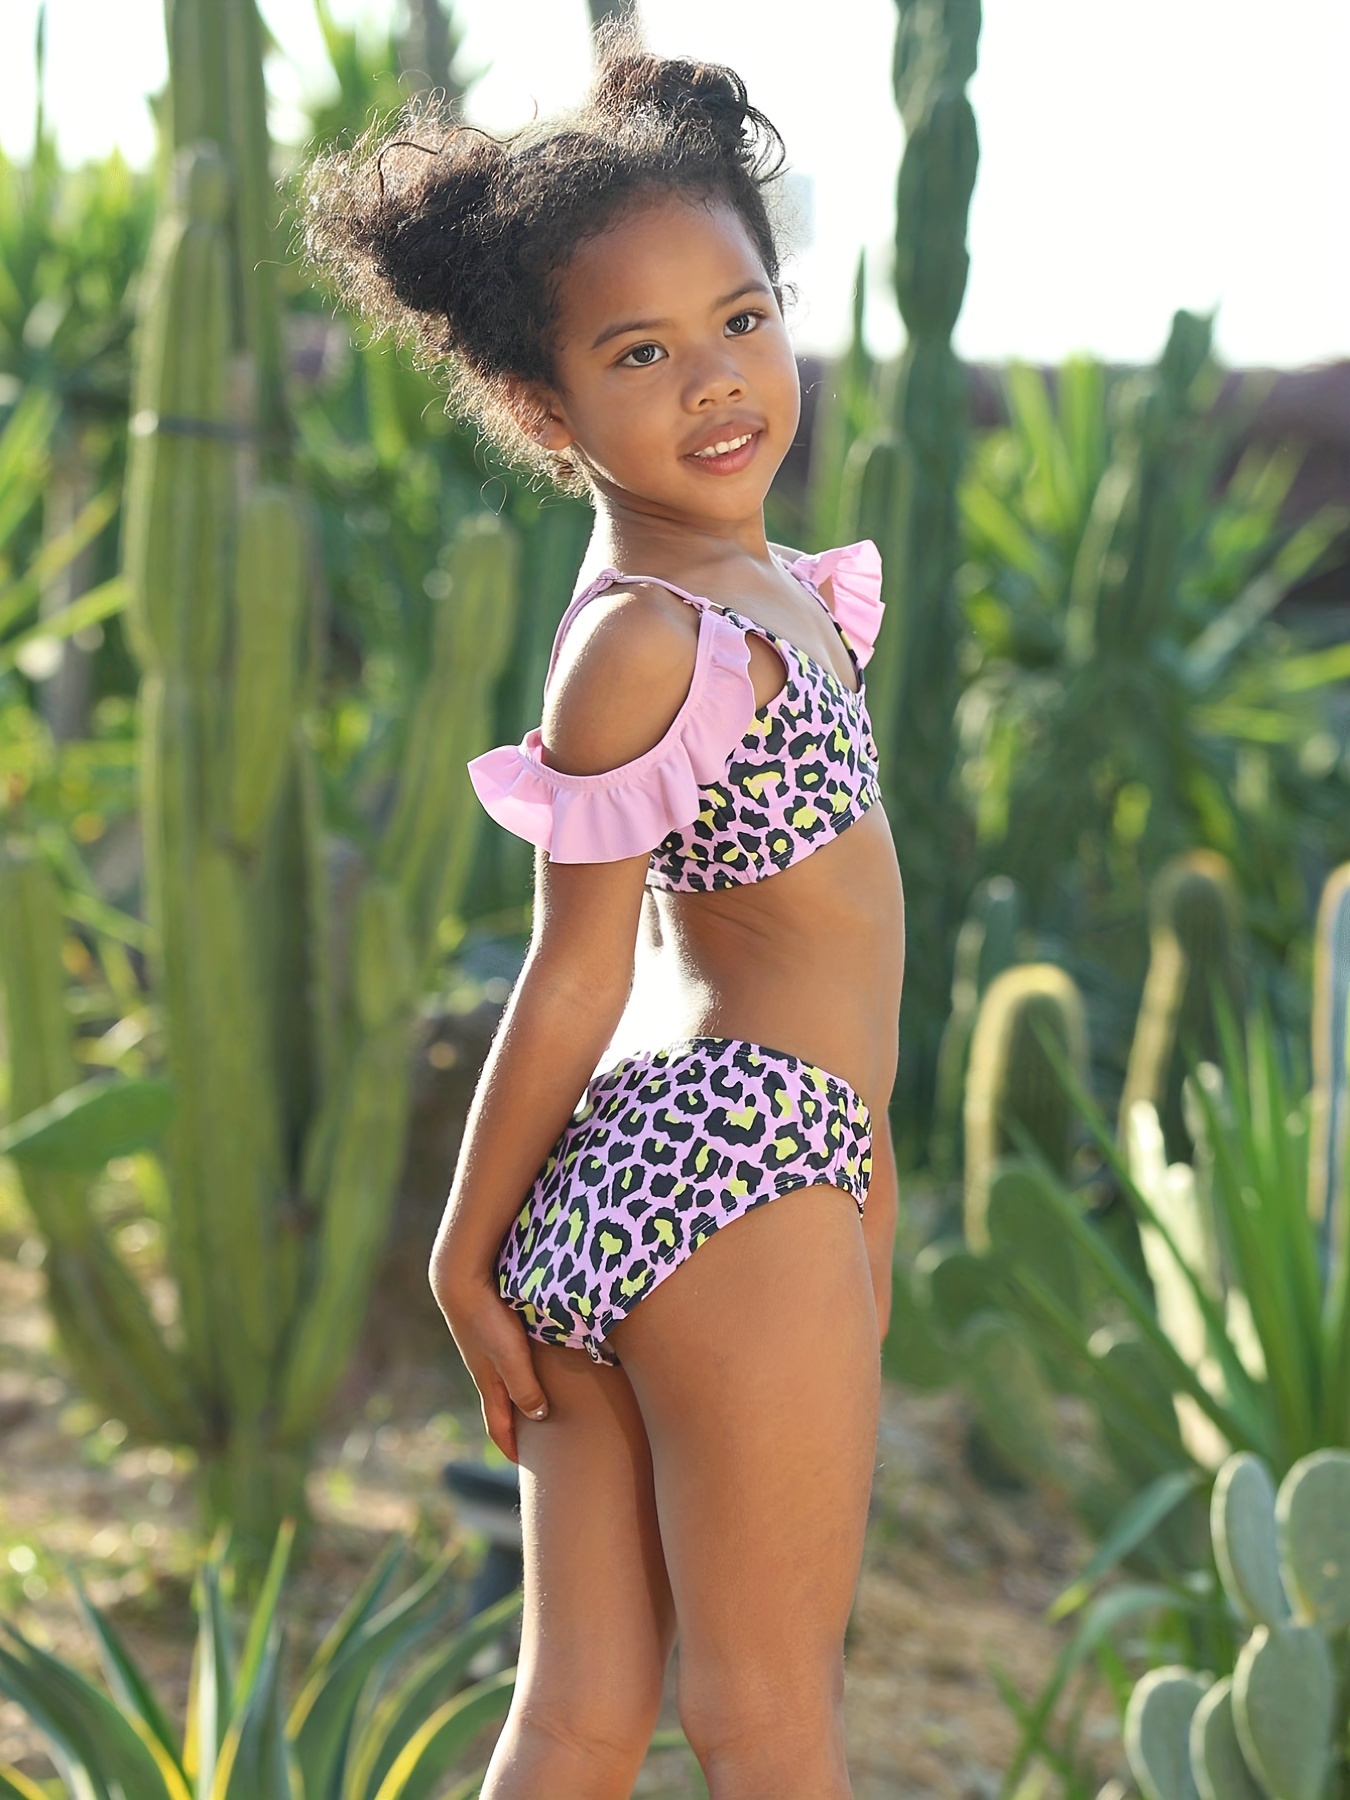 Kids Girl Bikini Set Ruffle Maillot de bain Maillot de bain d'été